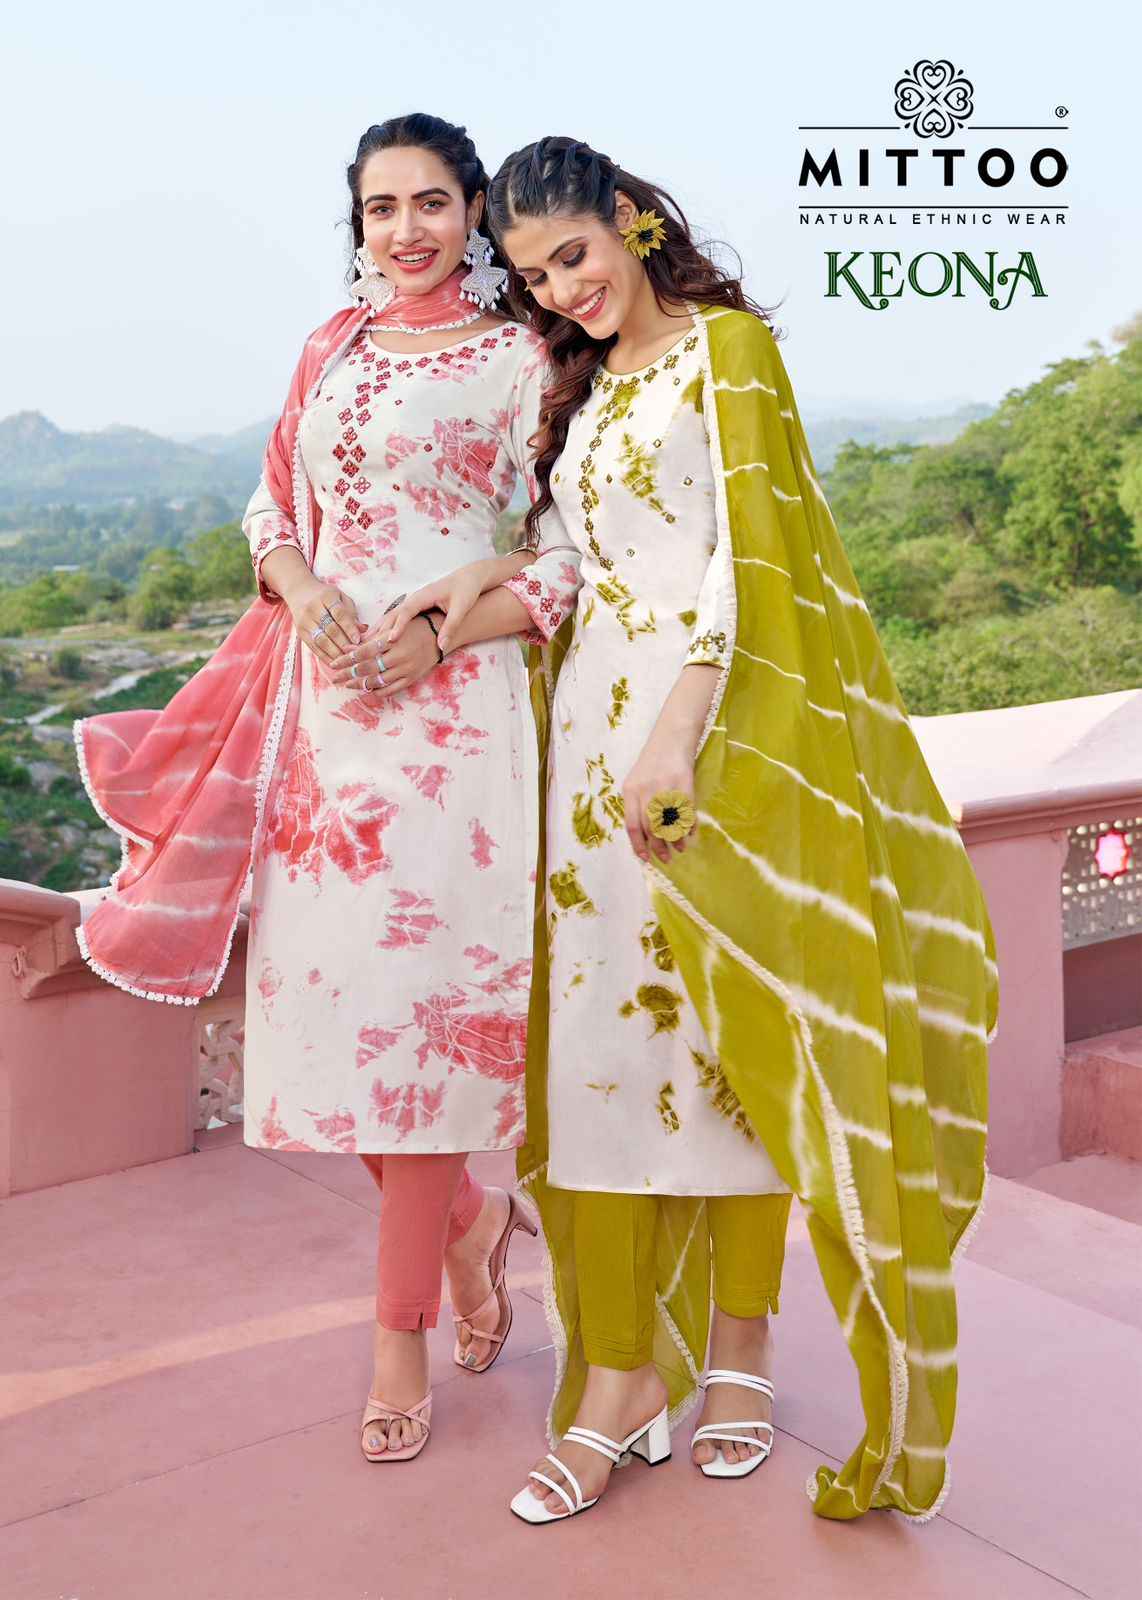 Mittoo Keona Rayon Print Readymade Suit (4 Pc Catalog)